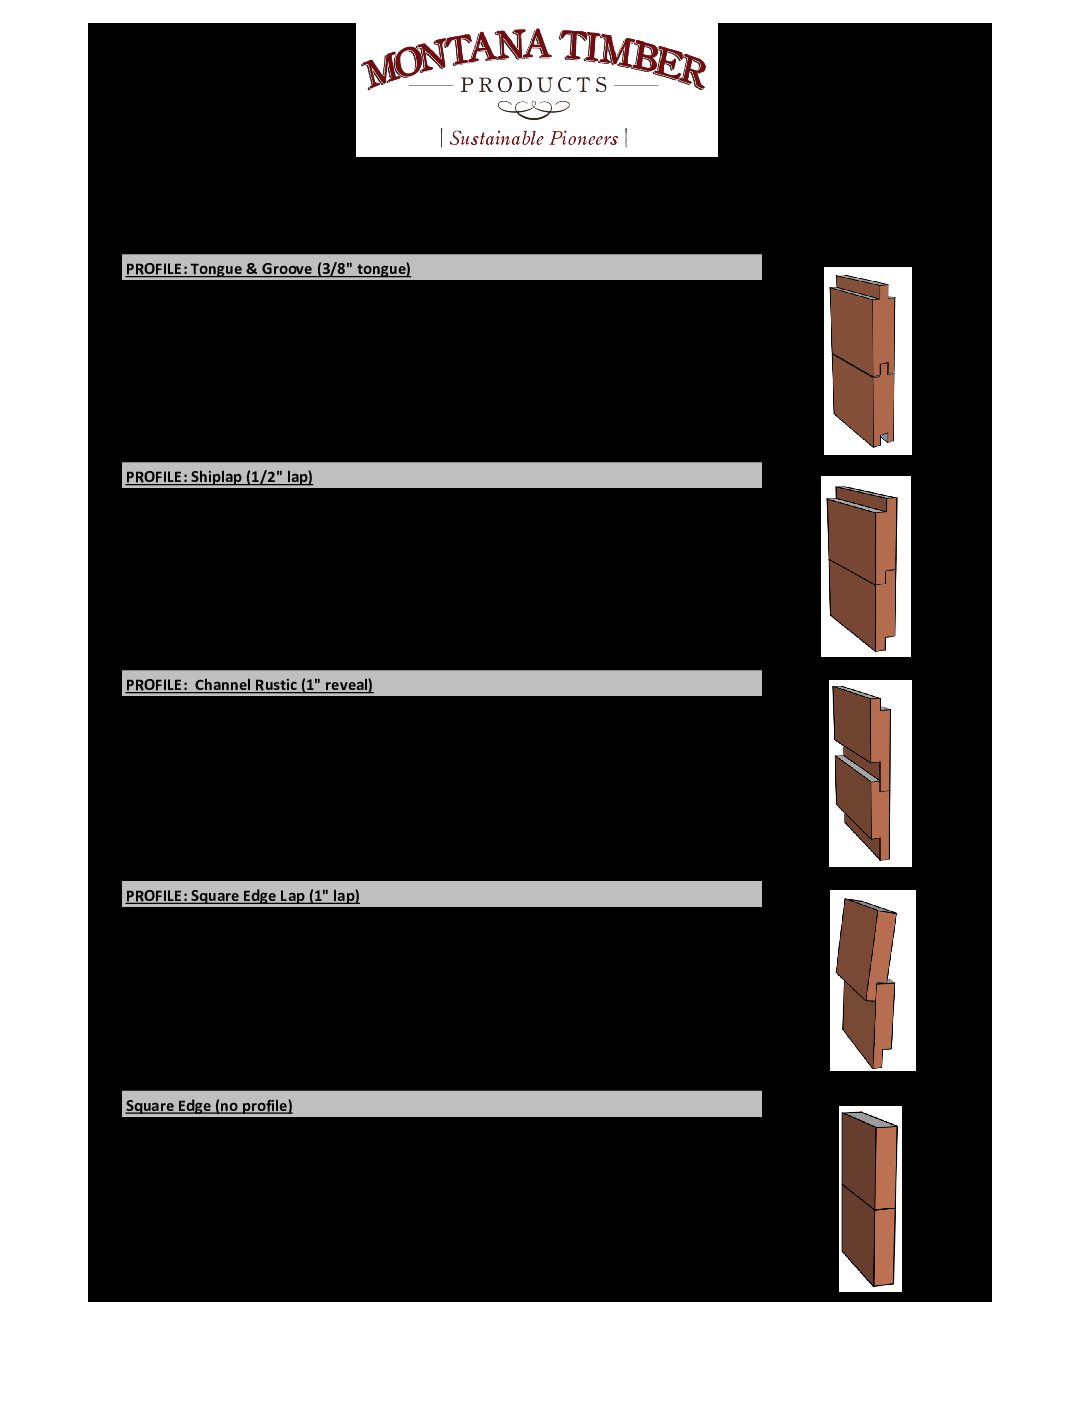 Face Coverage & Profile Specifications (Cedar)